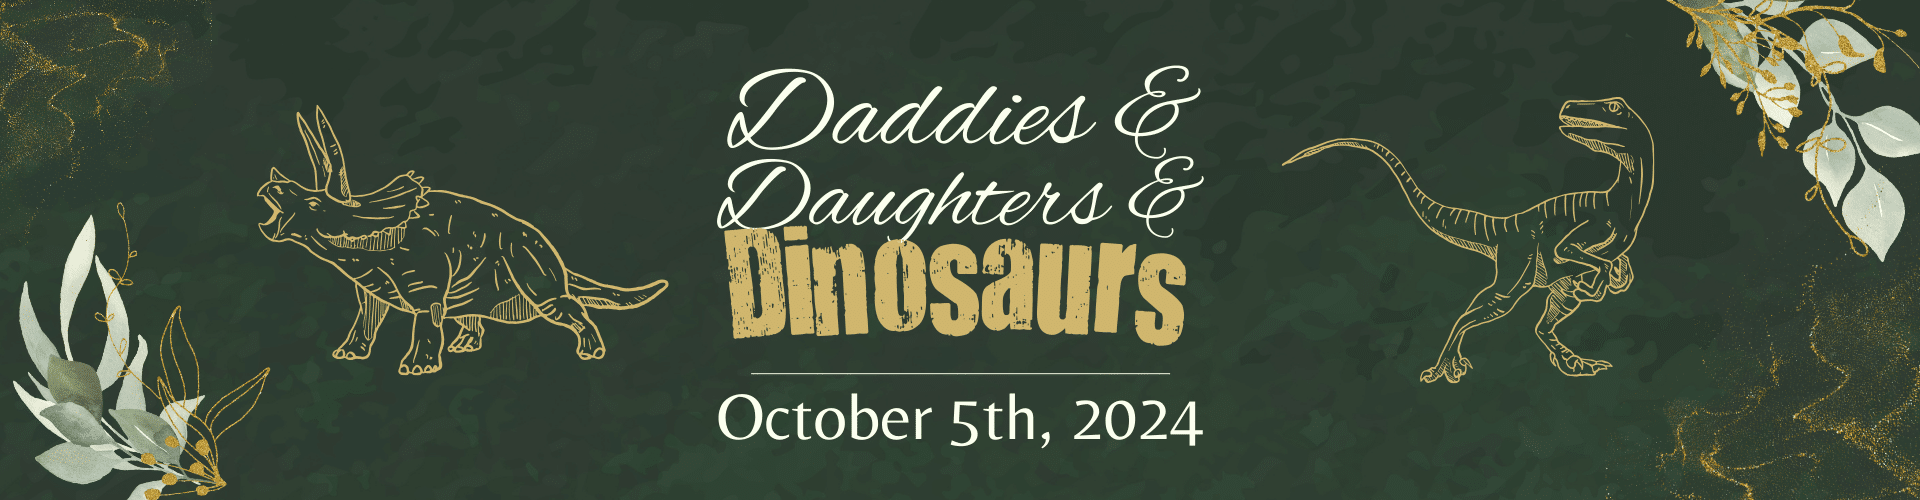 Daddies & Daughters & Dinosaurs